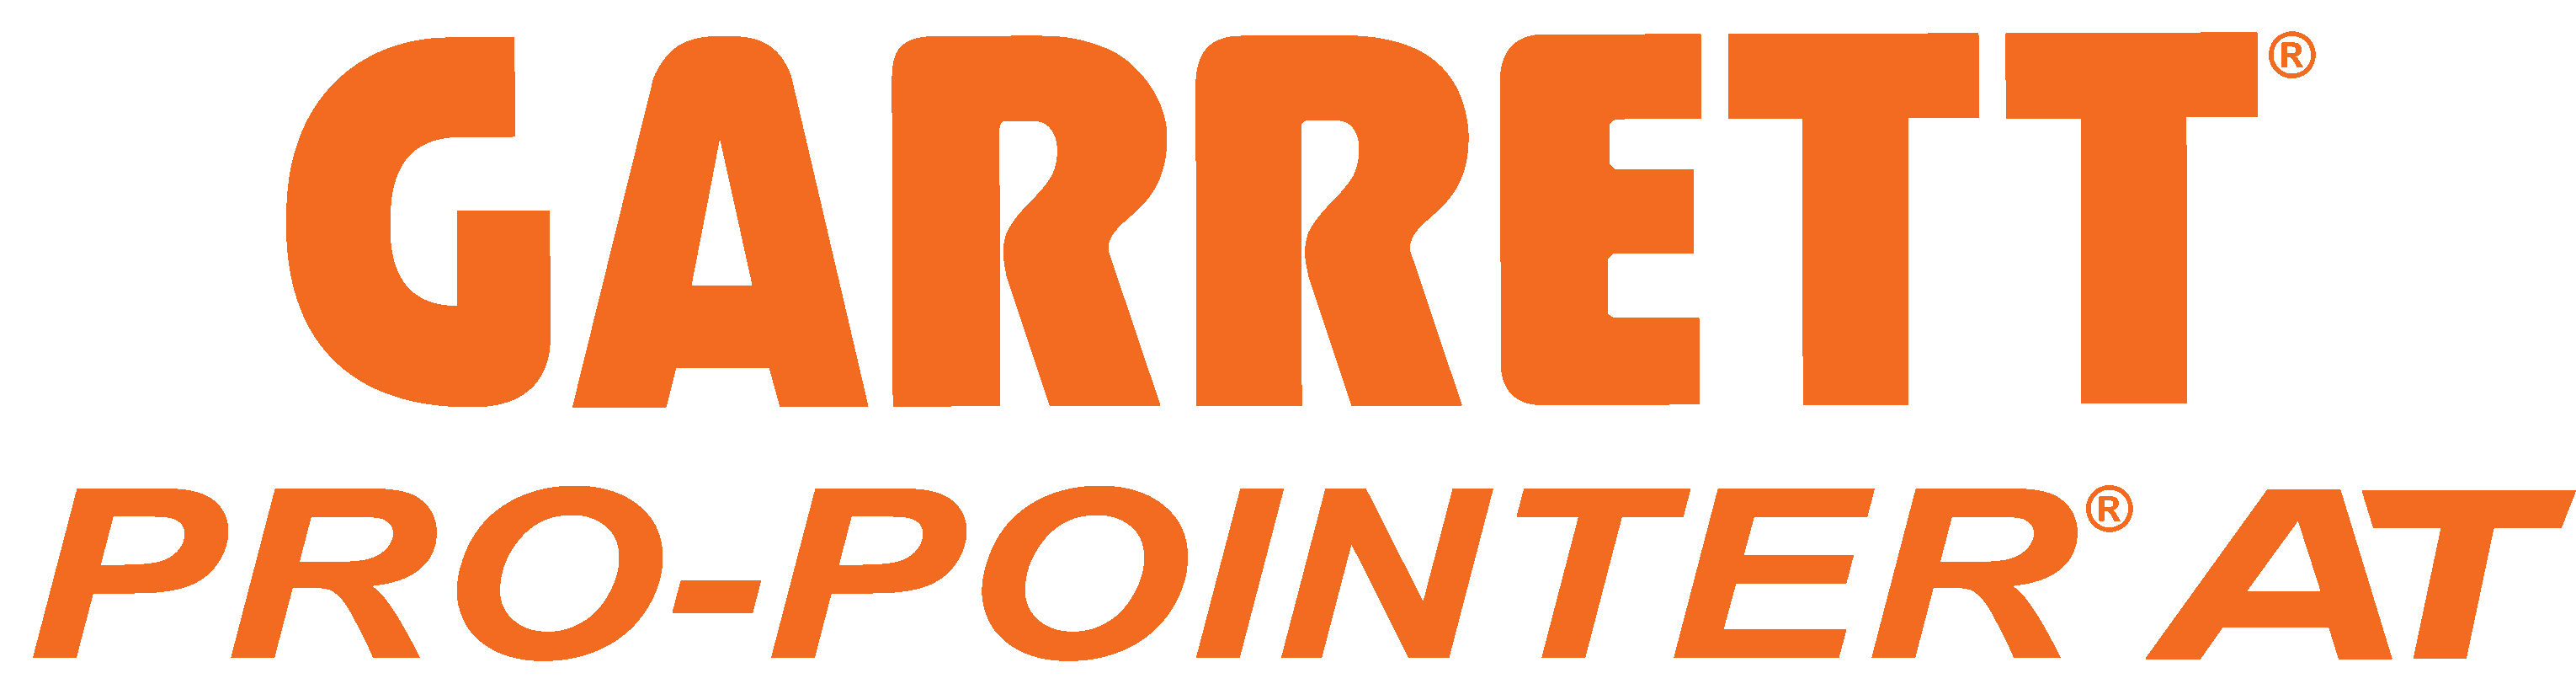 pro-pointer AT logo